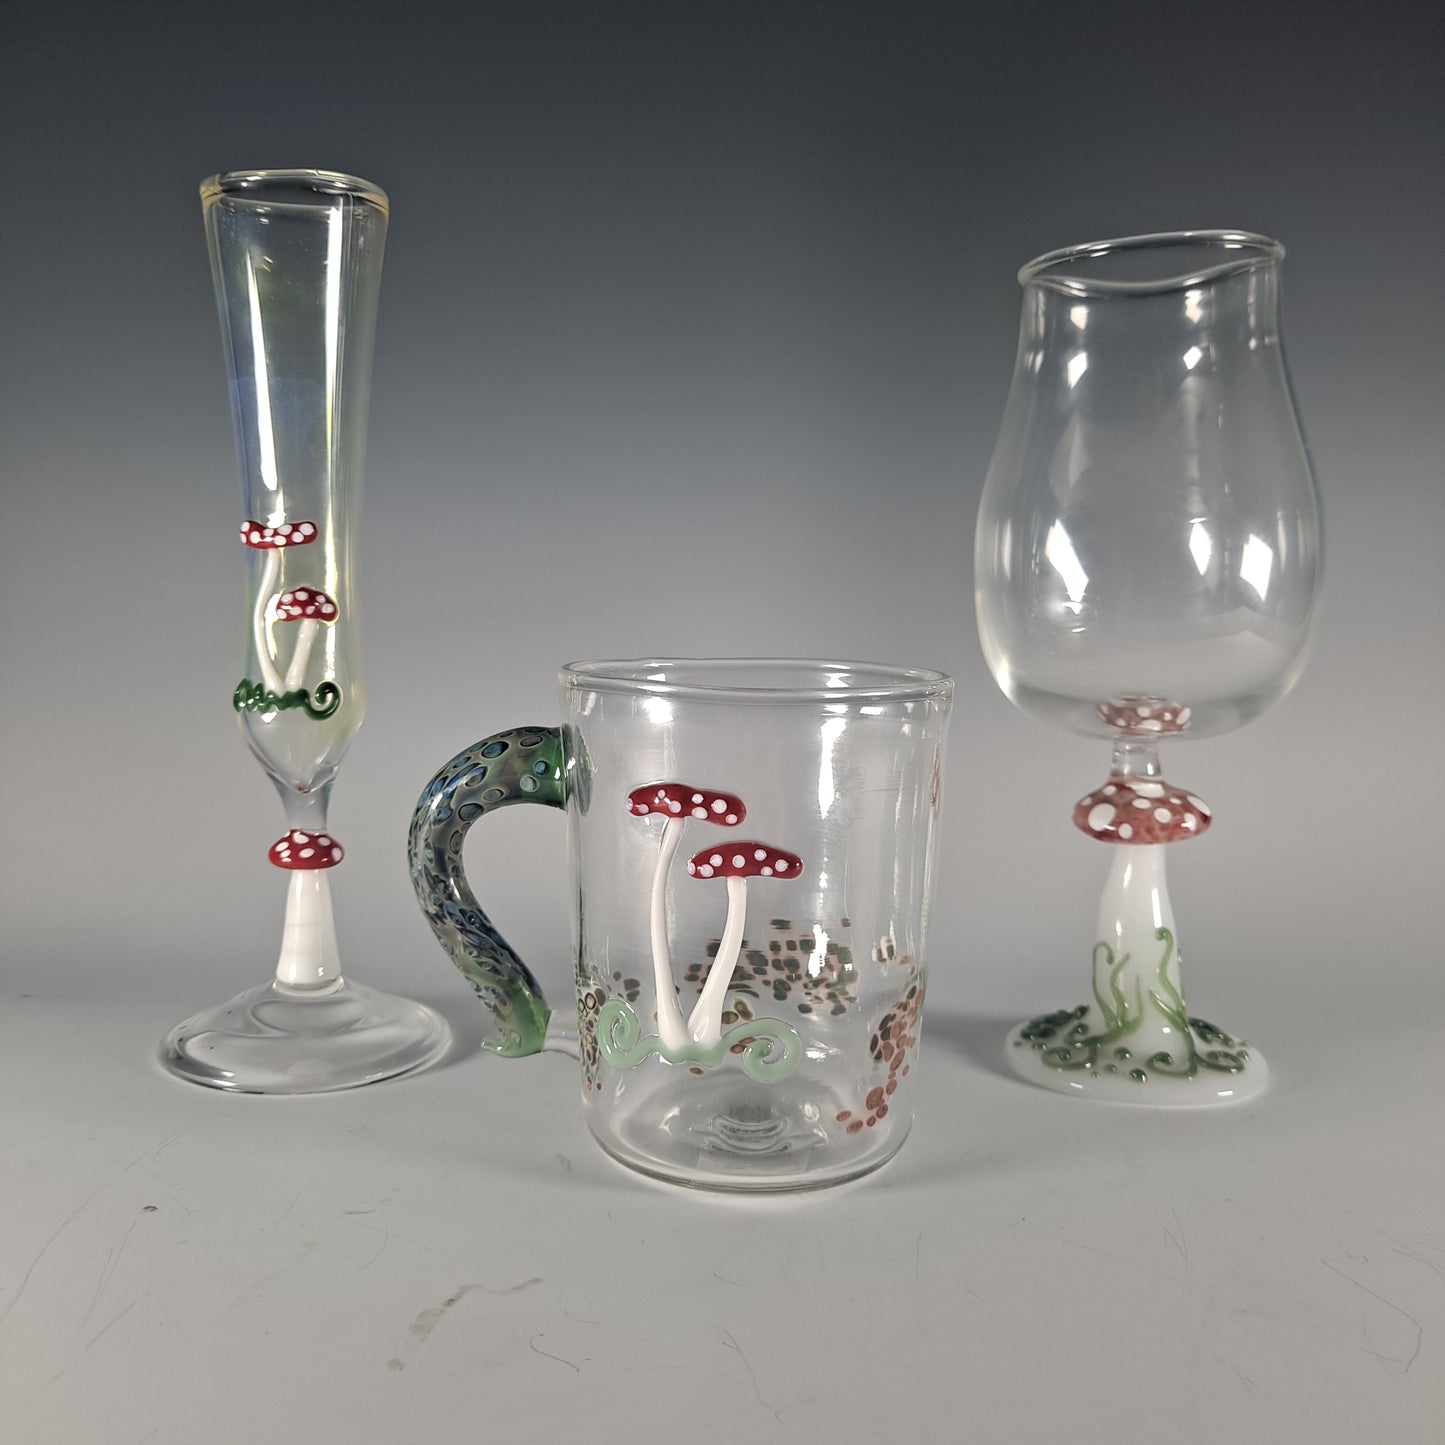 Amanita Mushroom Drinkware, Cups, Wine glasses, and Mugs